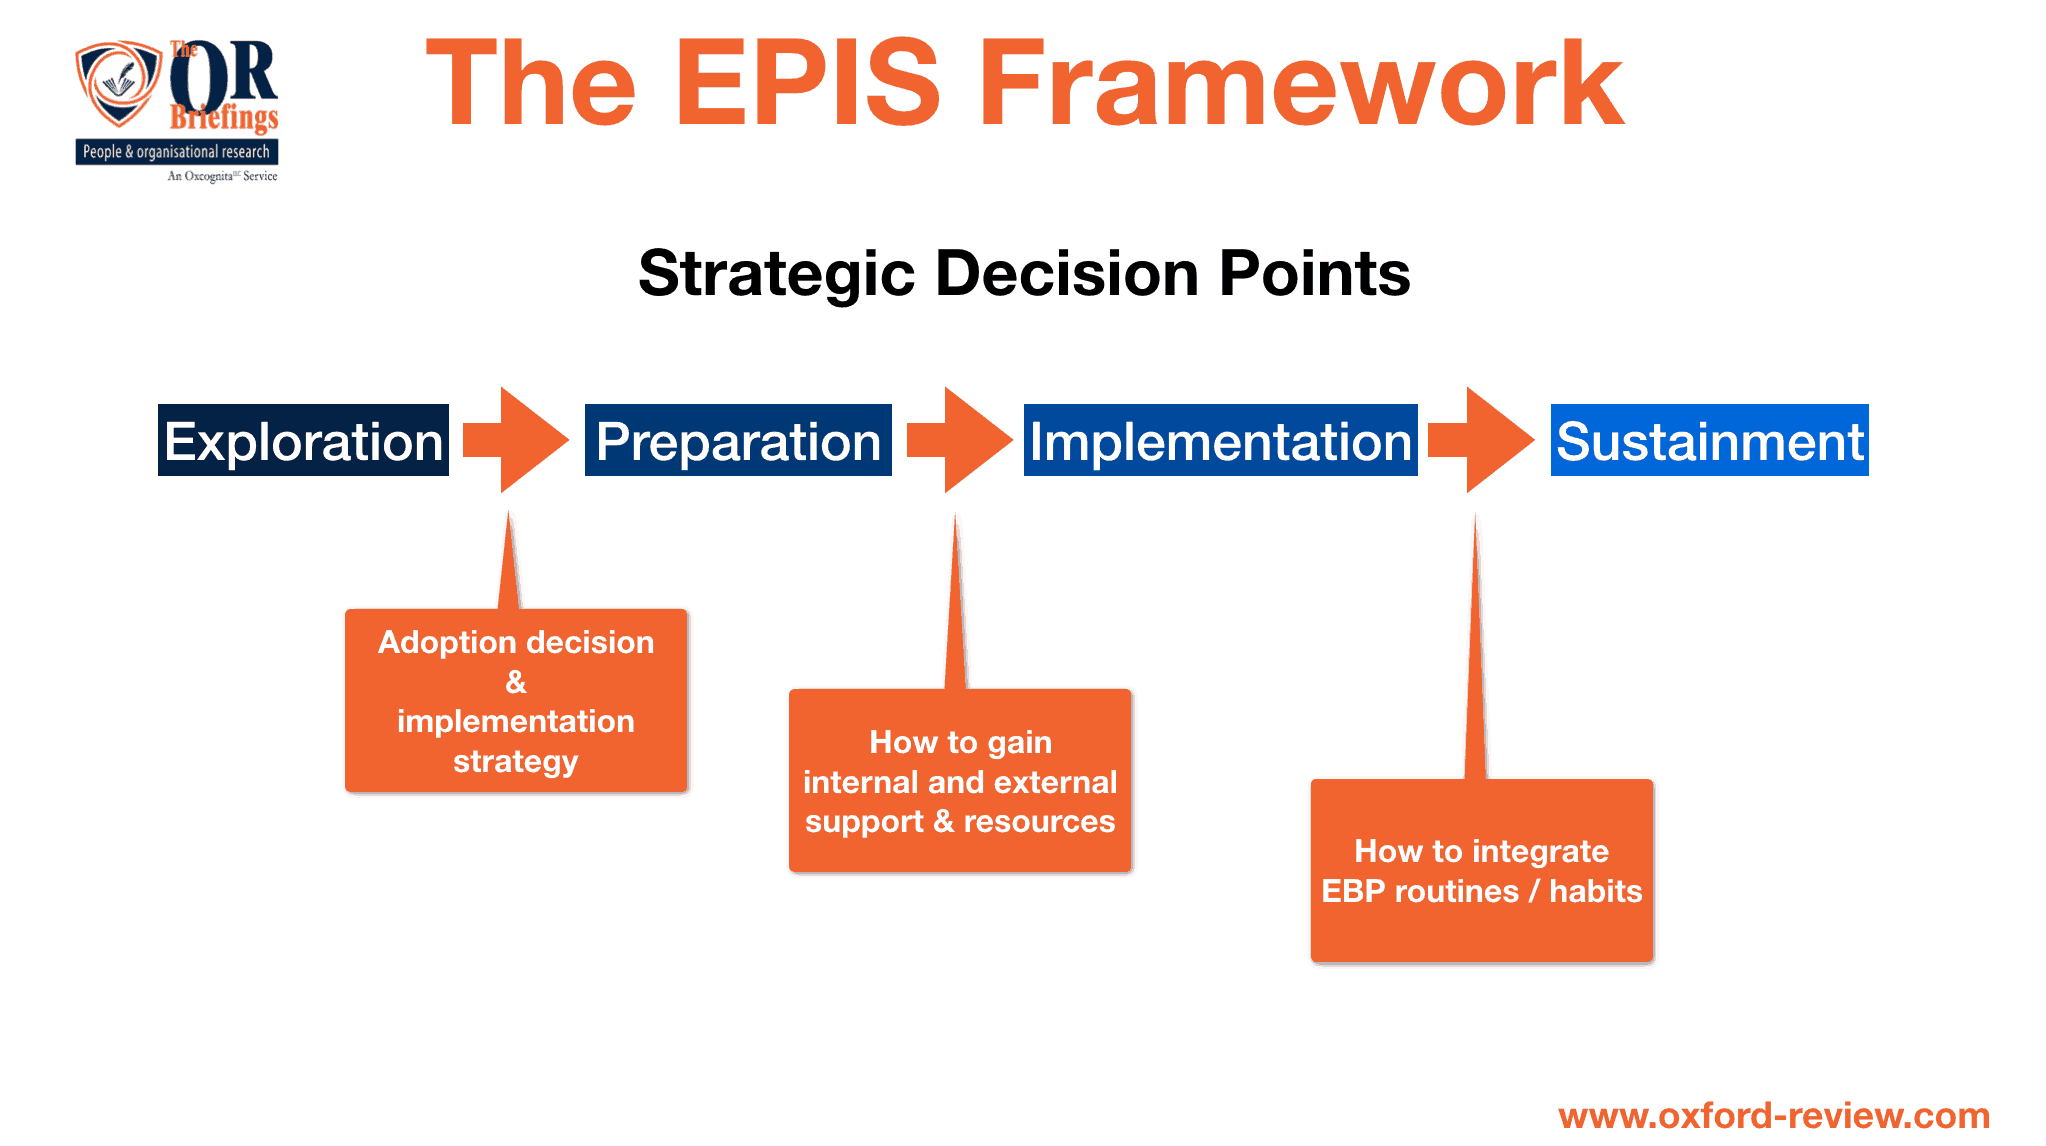 EPIS strategic decision points